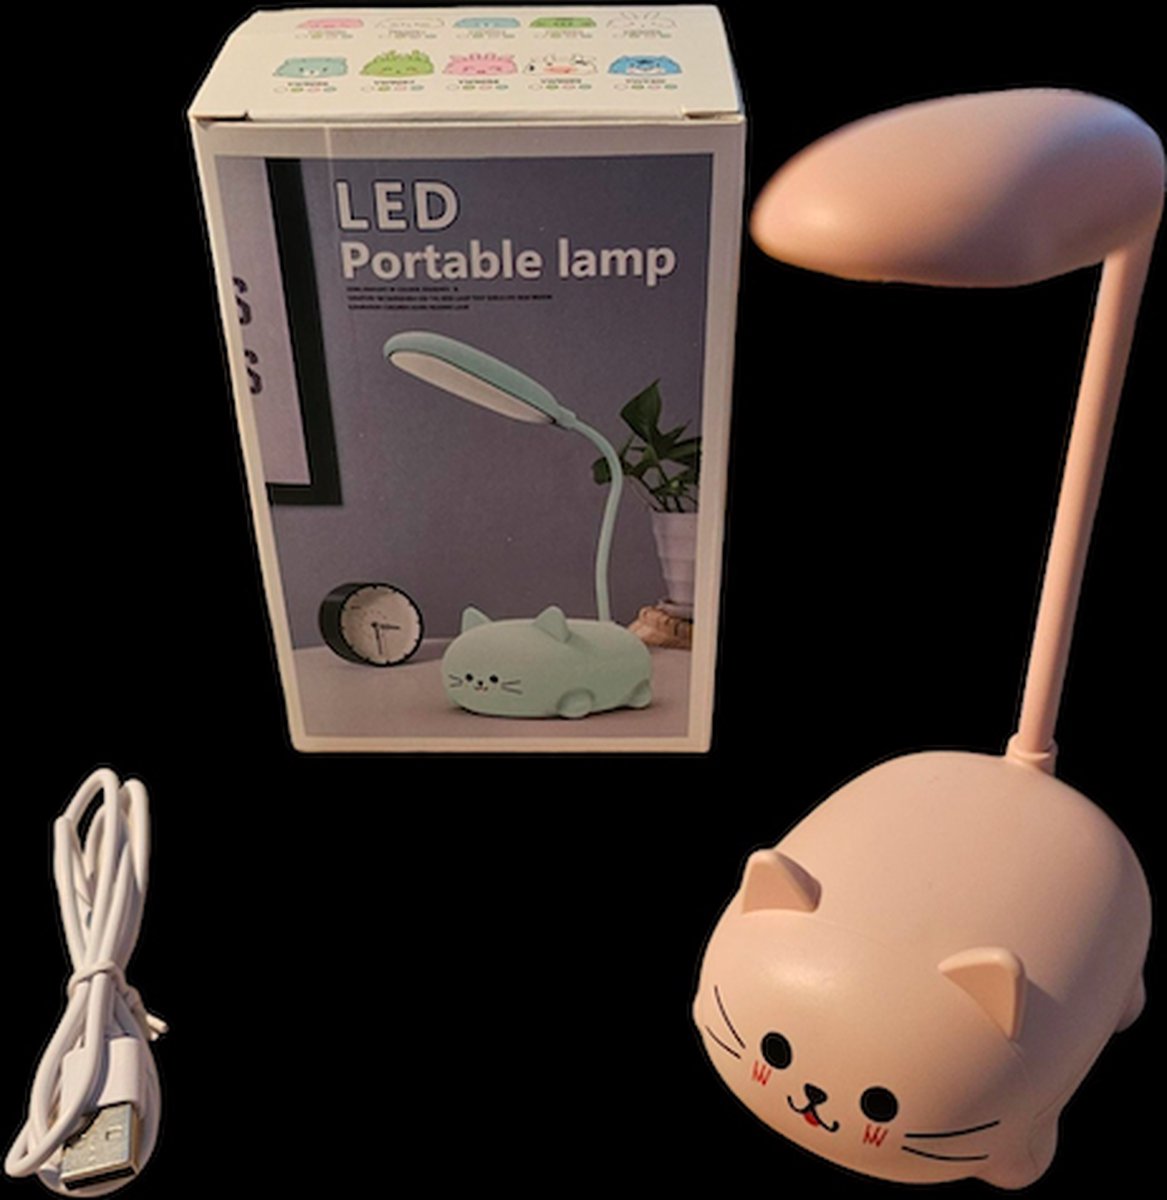 OGS - Kinder bureau lamp - Katten lamp roze - Lamp van kat - Led lamp - Bureau licht - Kinderkamer lamp - Leeslamp - Katten Leeslamp